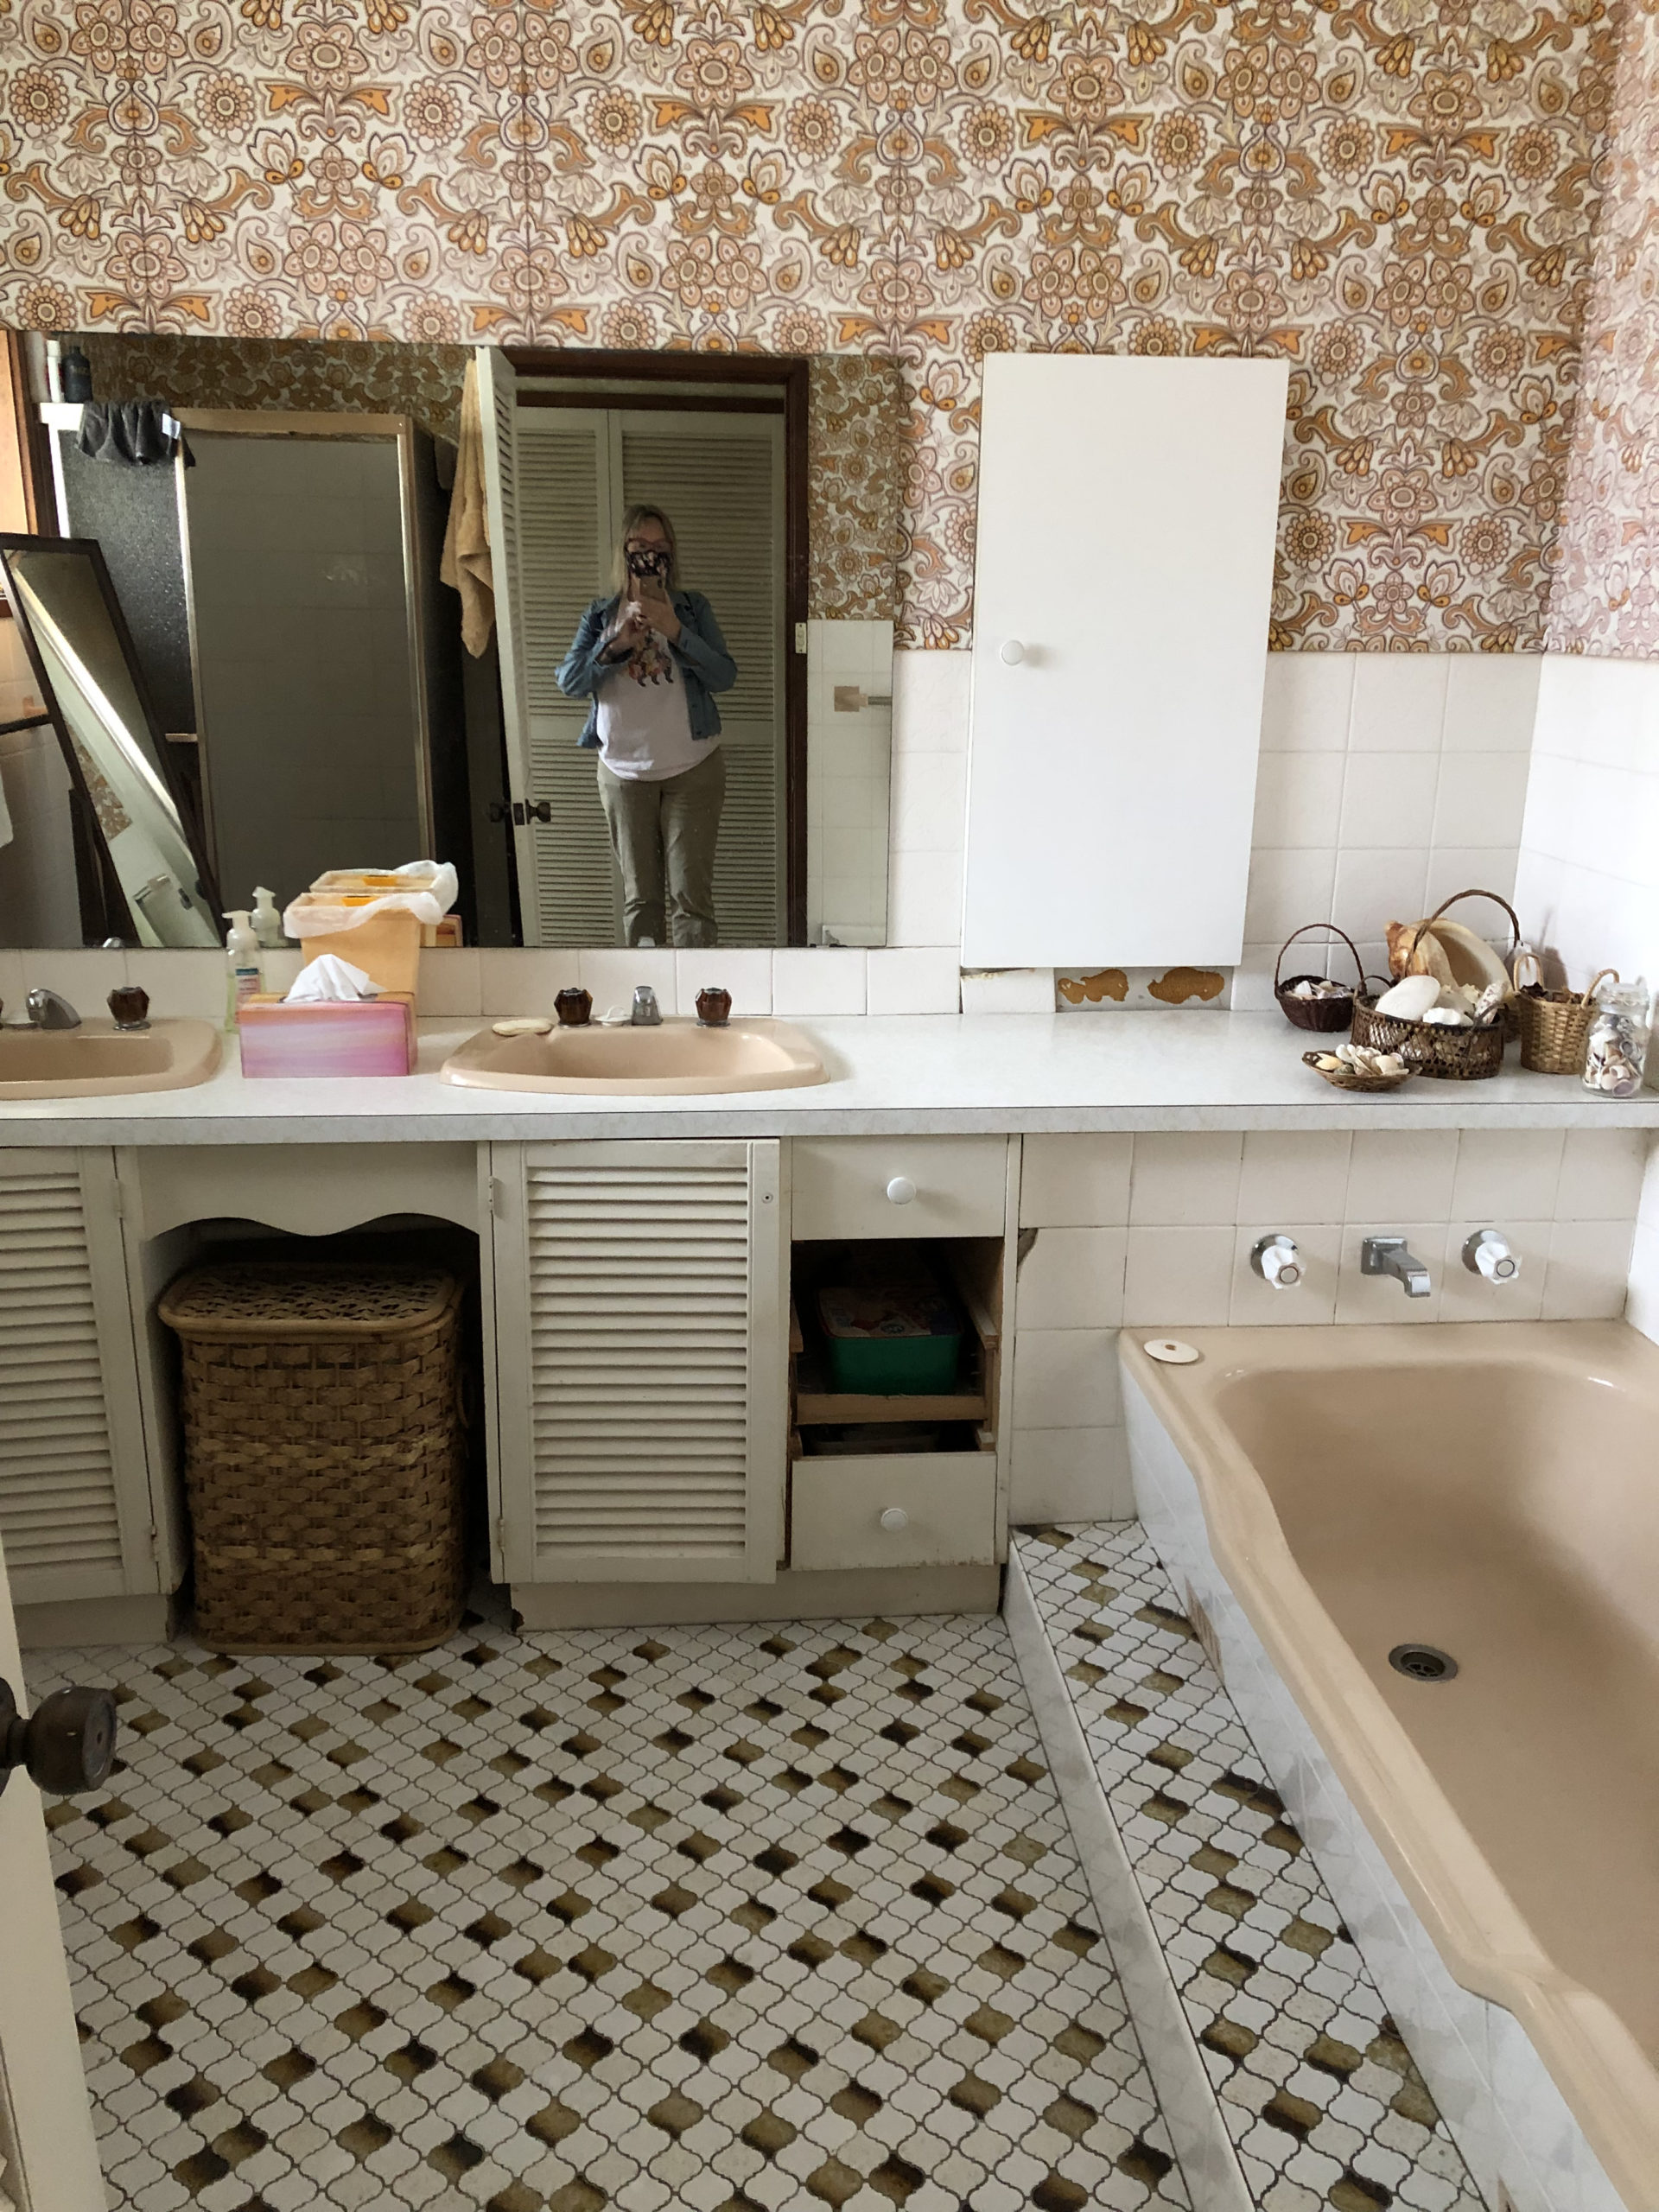 bathroom with vintage tiles